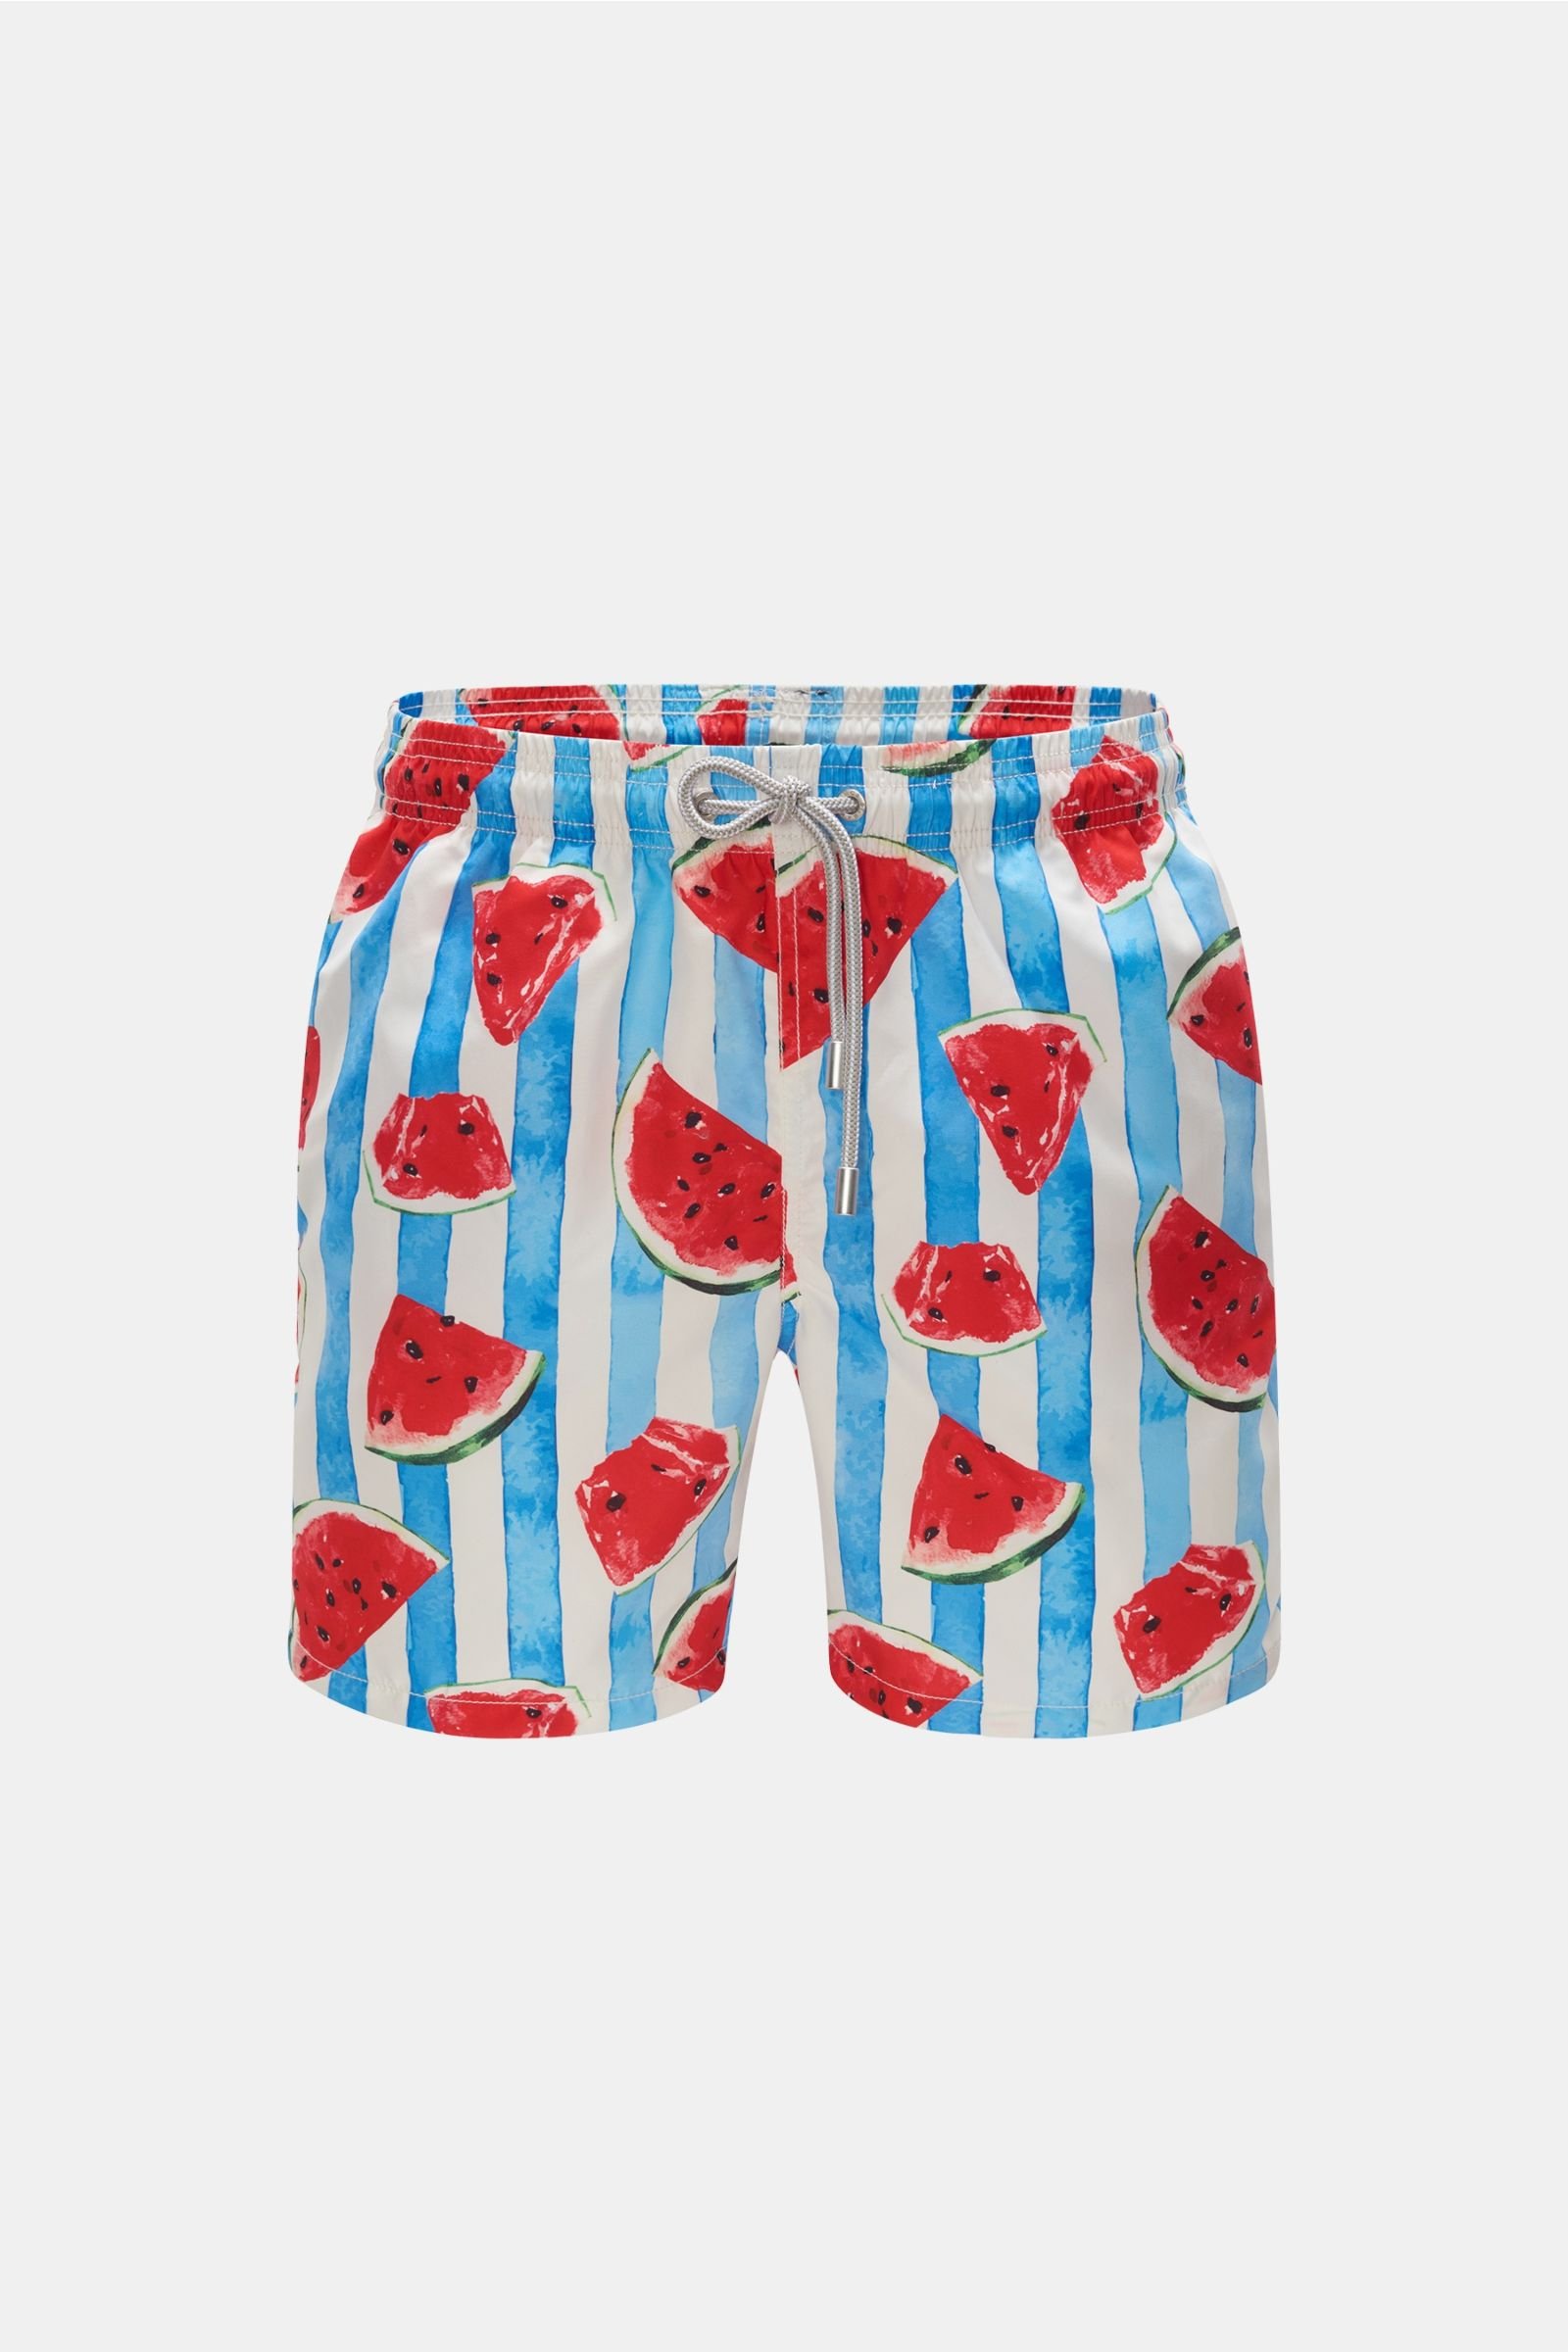 Swim shorts 'Juice Melon' light blue/white/red patterned